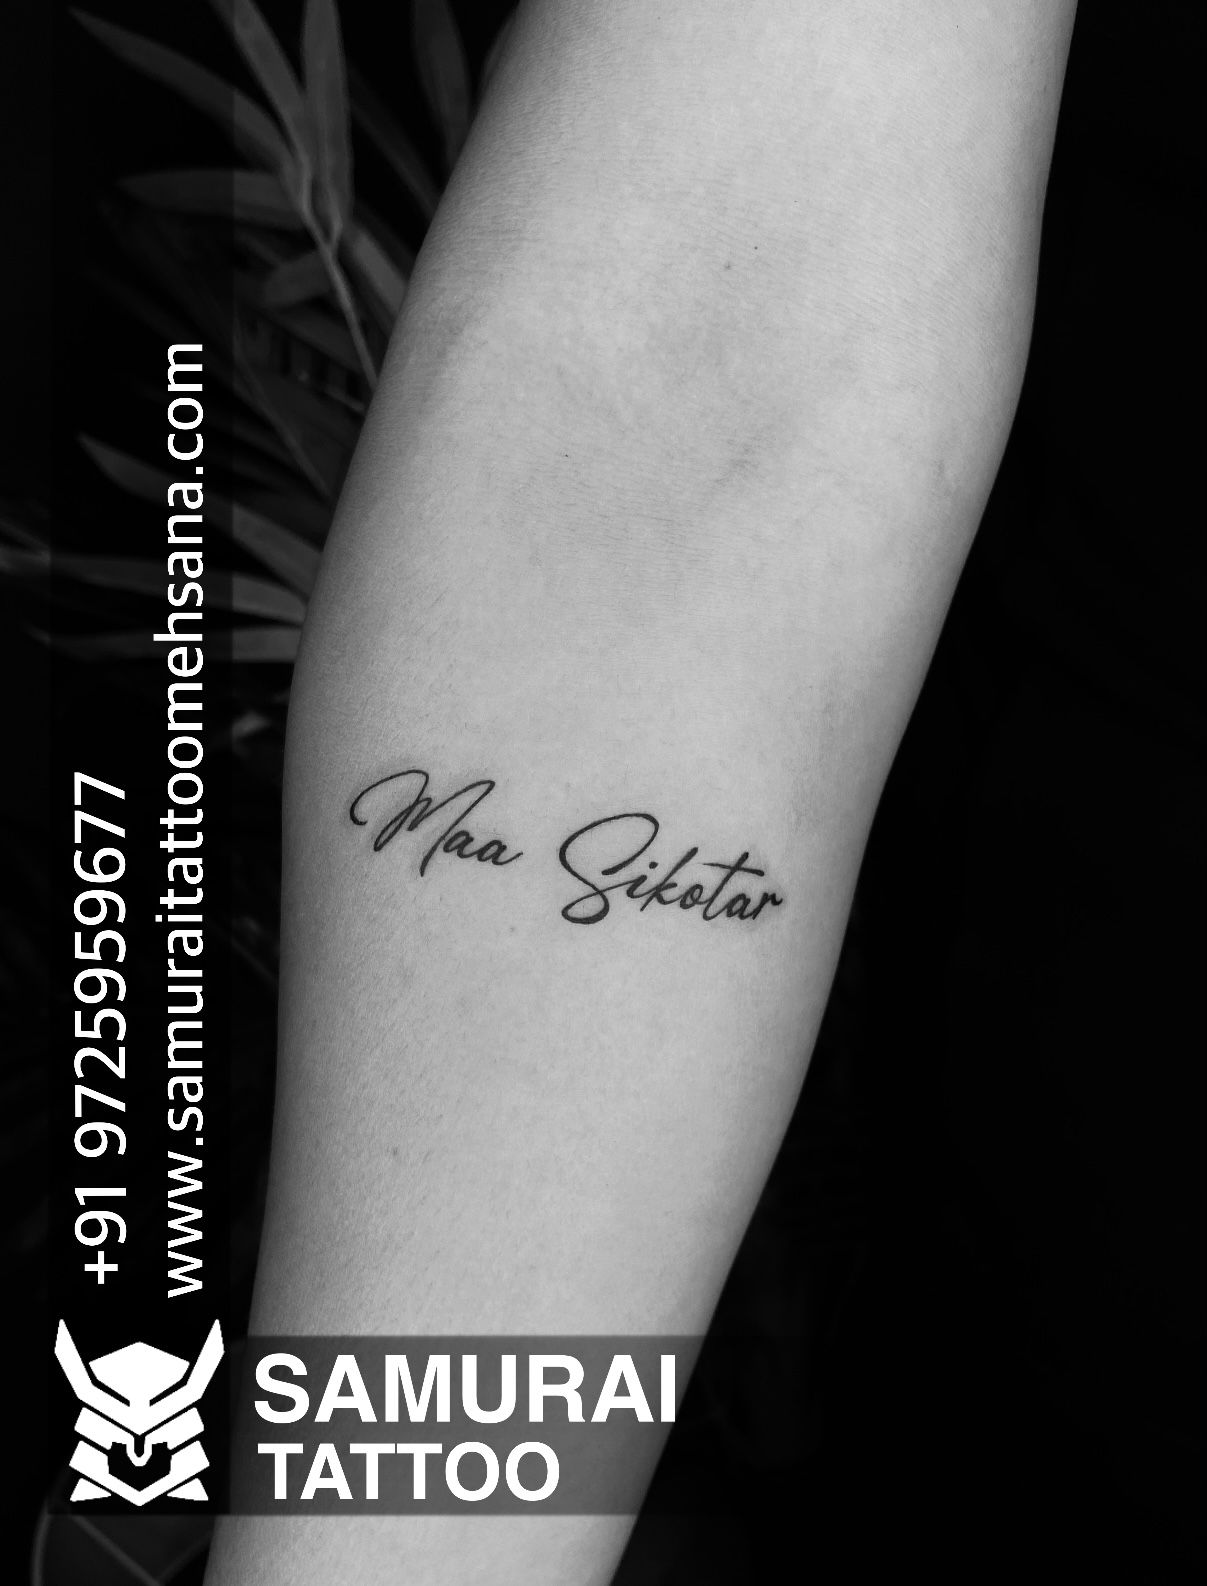 Sikotar tattoo  Sikotar Maa tattoo  Sikotar Maa new status  samurai  tattoo Mehsana  YouTube